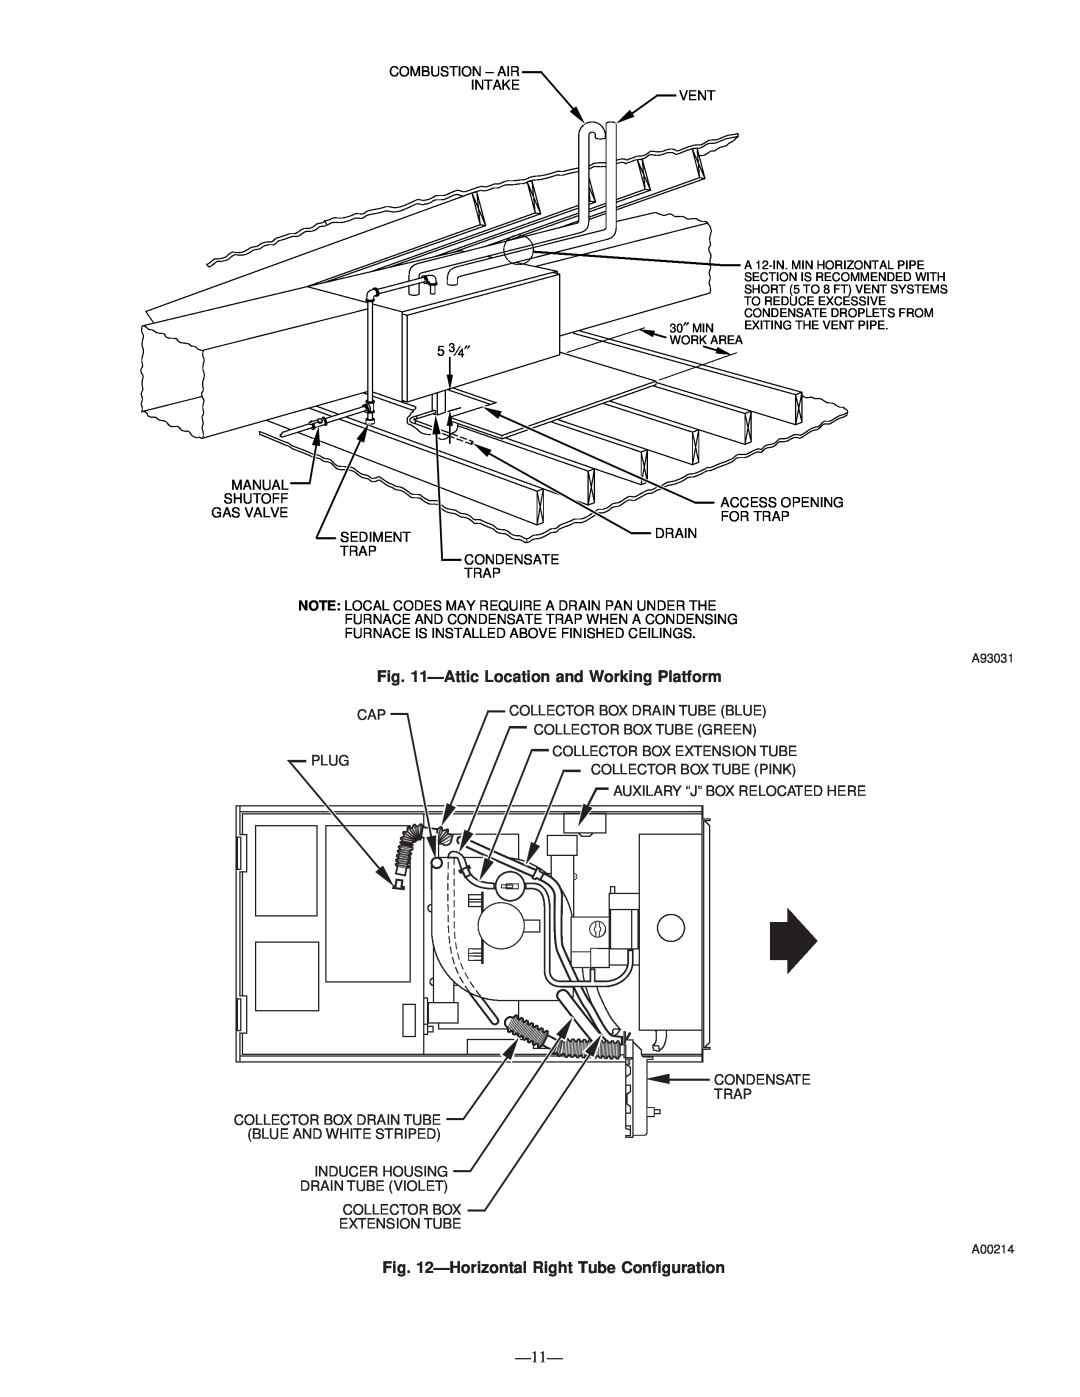 Bryant 340MAV instruction manual AtticLocation and Working Platform, HorizontalRight Tube Configuration 